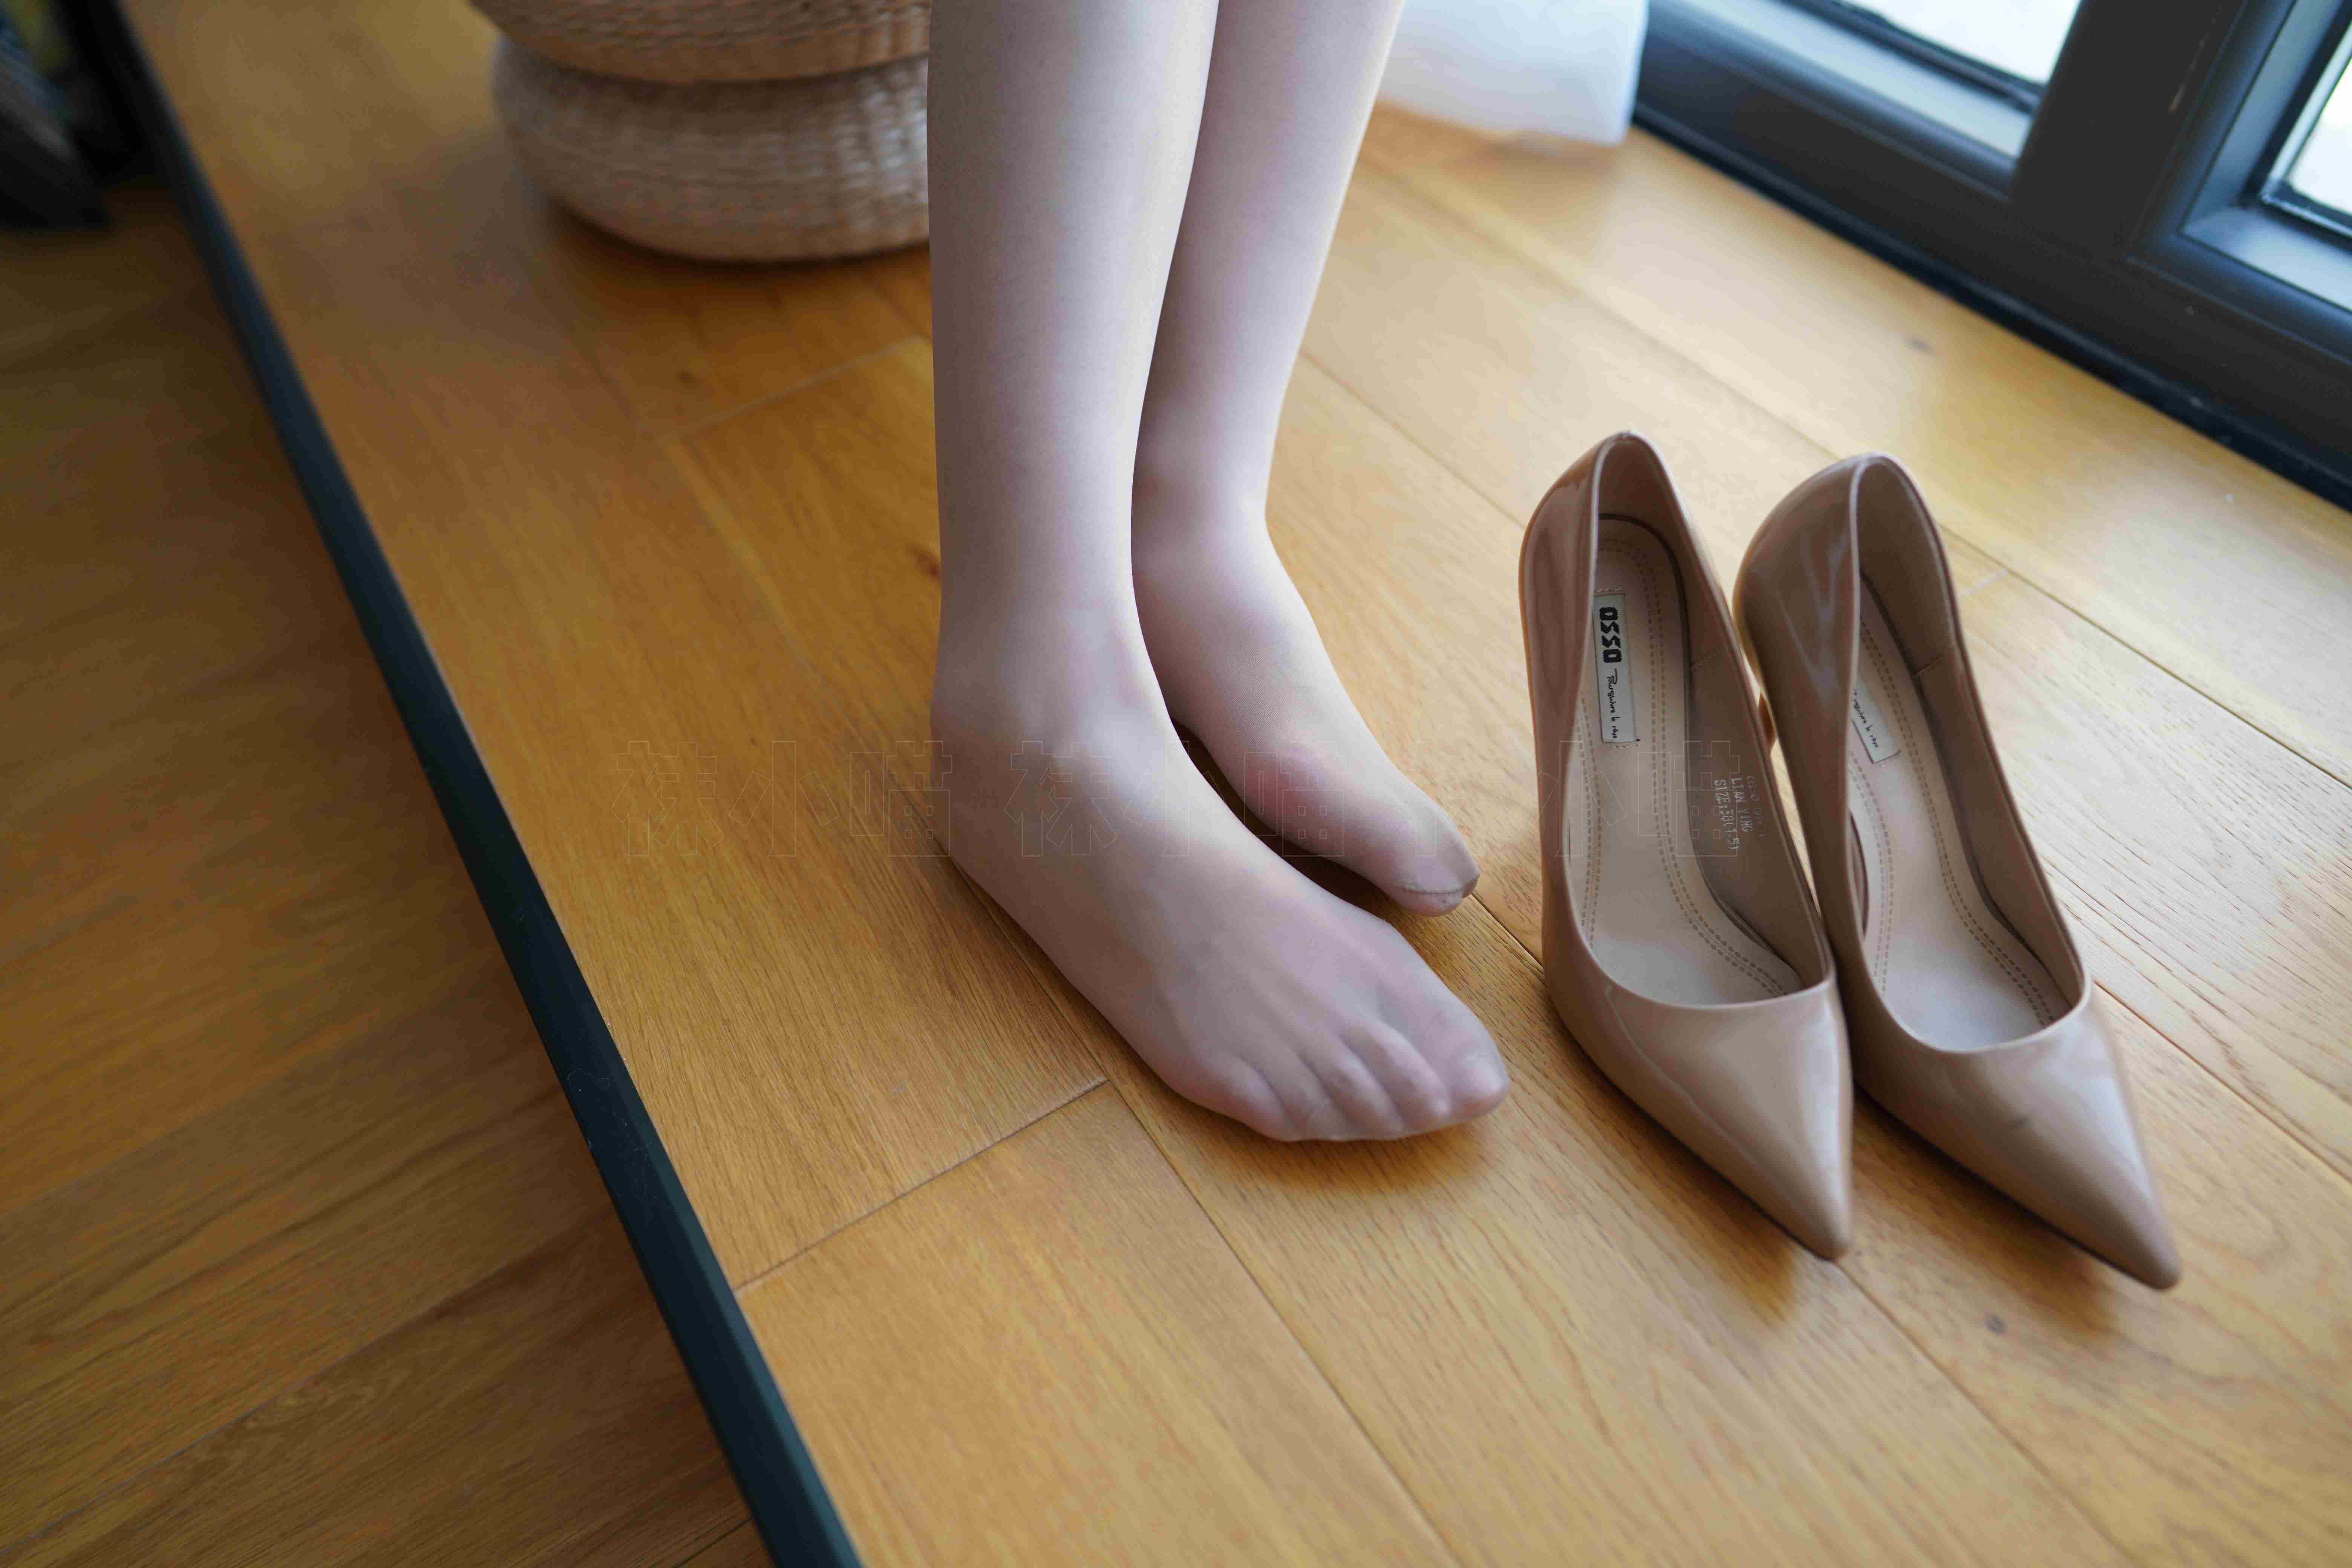 China Beauty Legs and feet 66